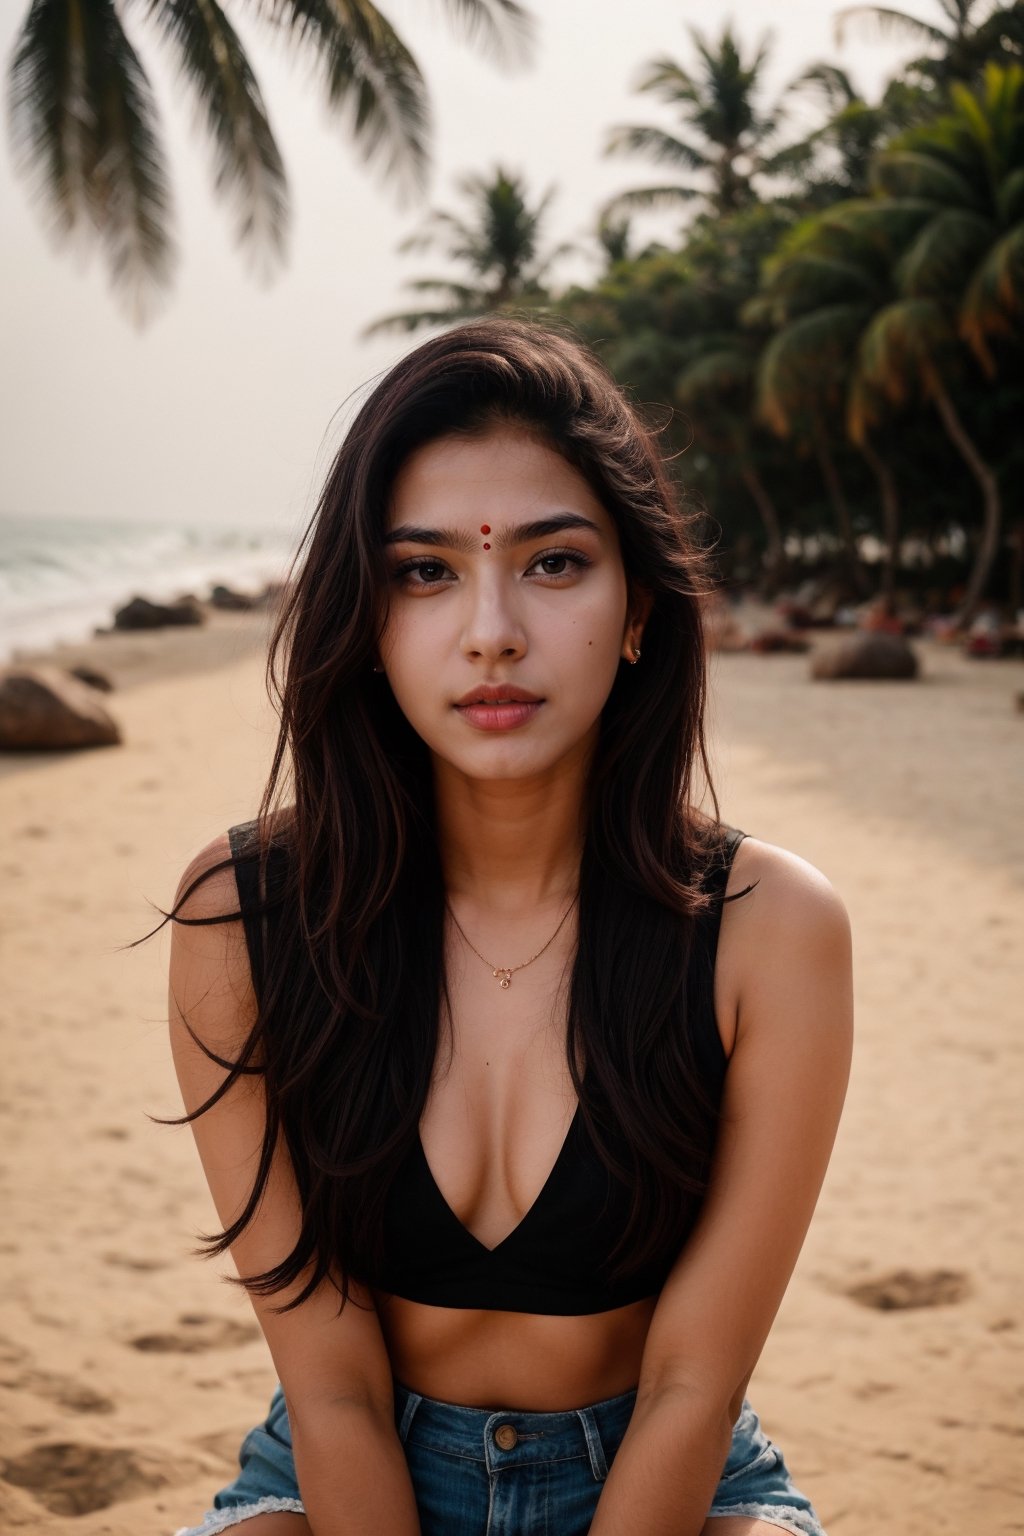 RAW photo, photo of indian girl called Zara Ladwa, instagram model(25yo), (dusky_skin),enjoying vacation in Goa, cool photography utilizing a 85mm lens for a cinematic feel,photorealistic,AanyaaSanaya